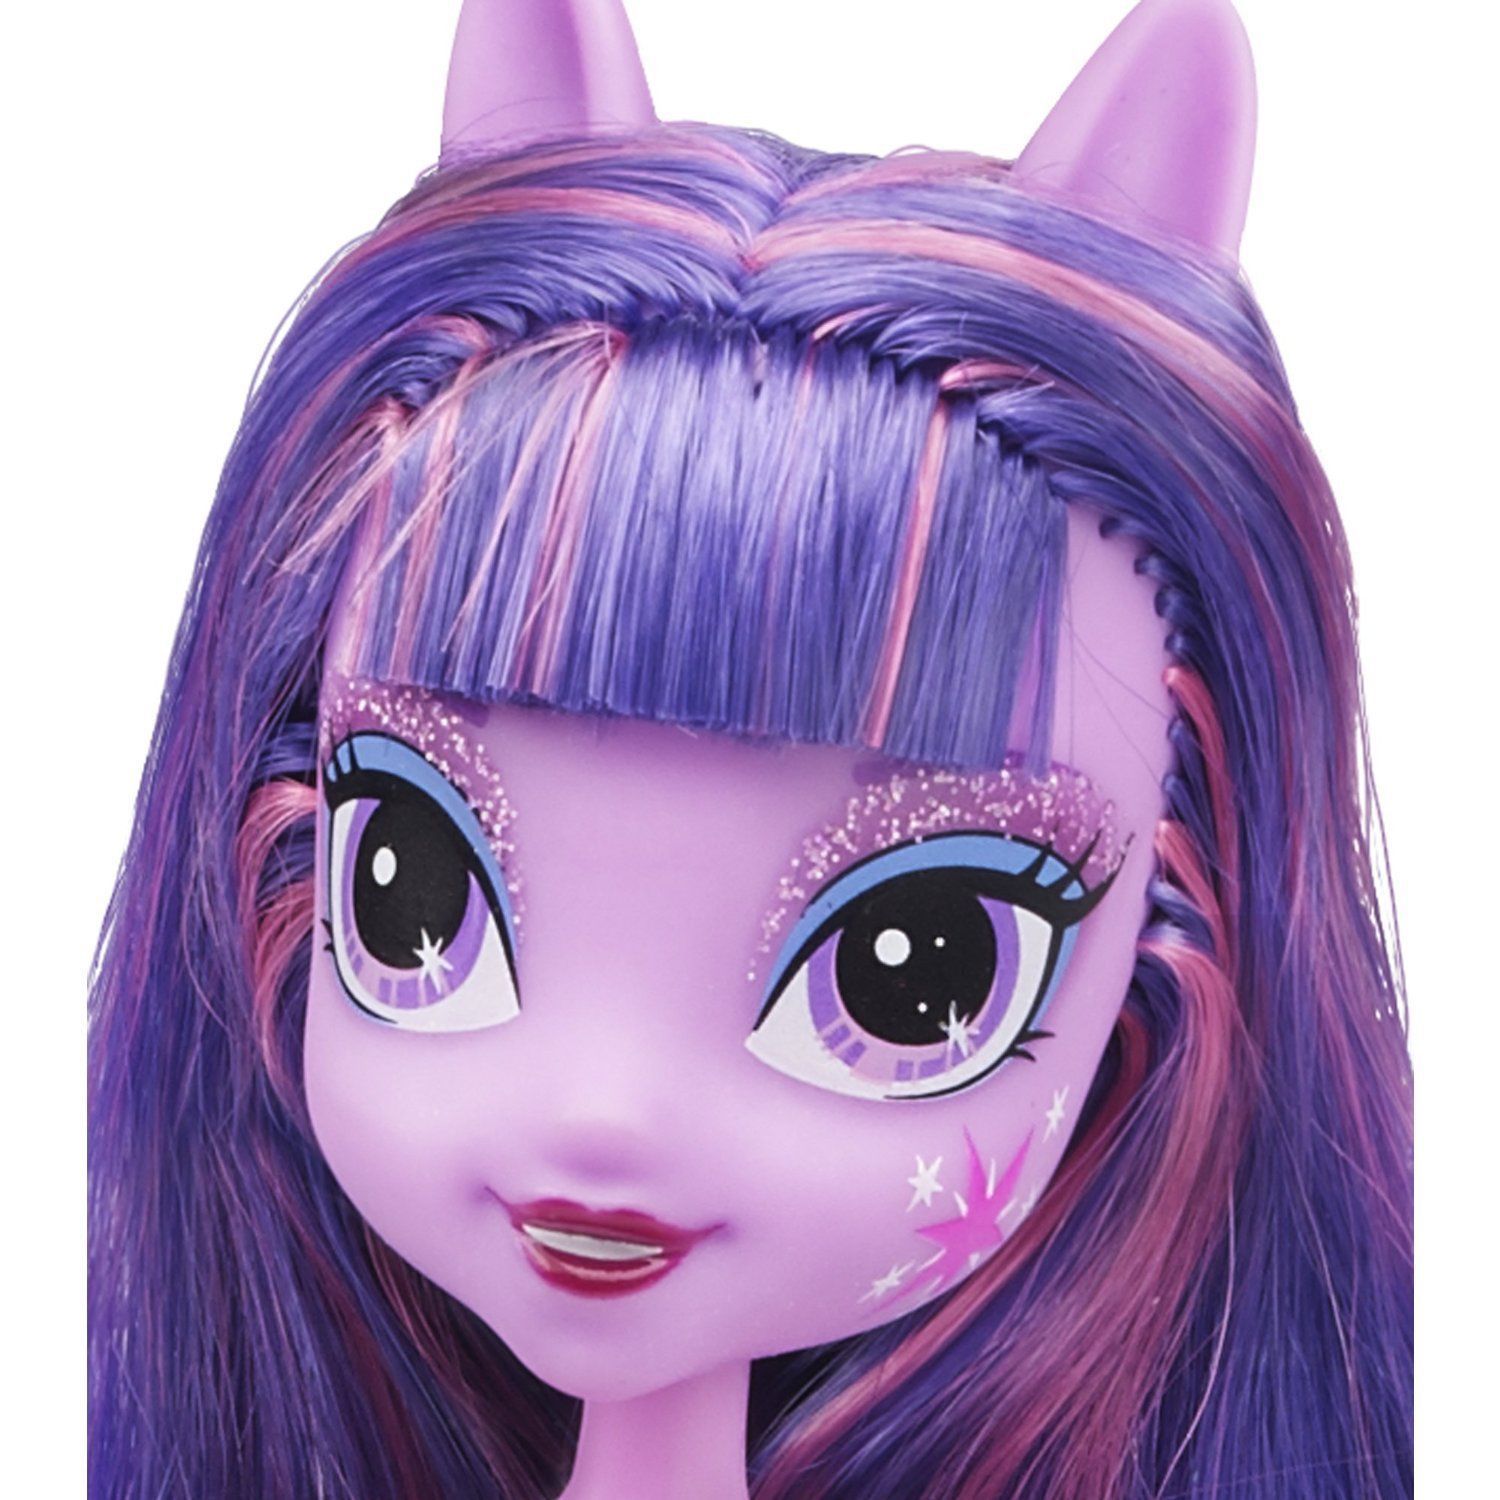 Кукла pony. Twilight Sparkle кукла. Кукла Эквестрия герлз Твайлайт Спаркл. Куклы my little Pony Твайлайт Спаркл. Кукла Twilight Sparkle b7535.